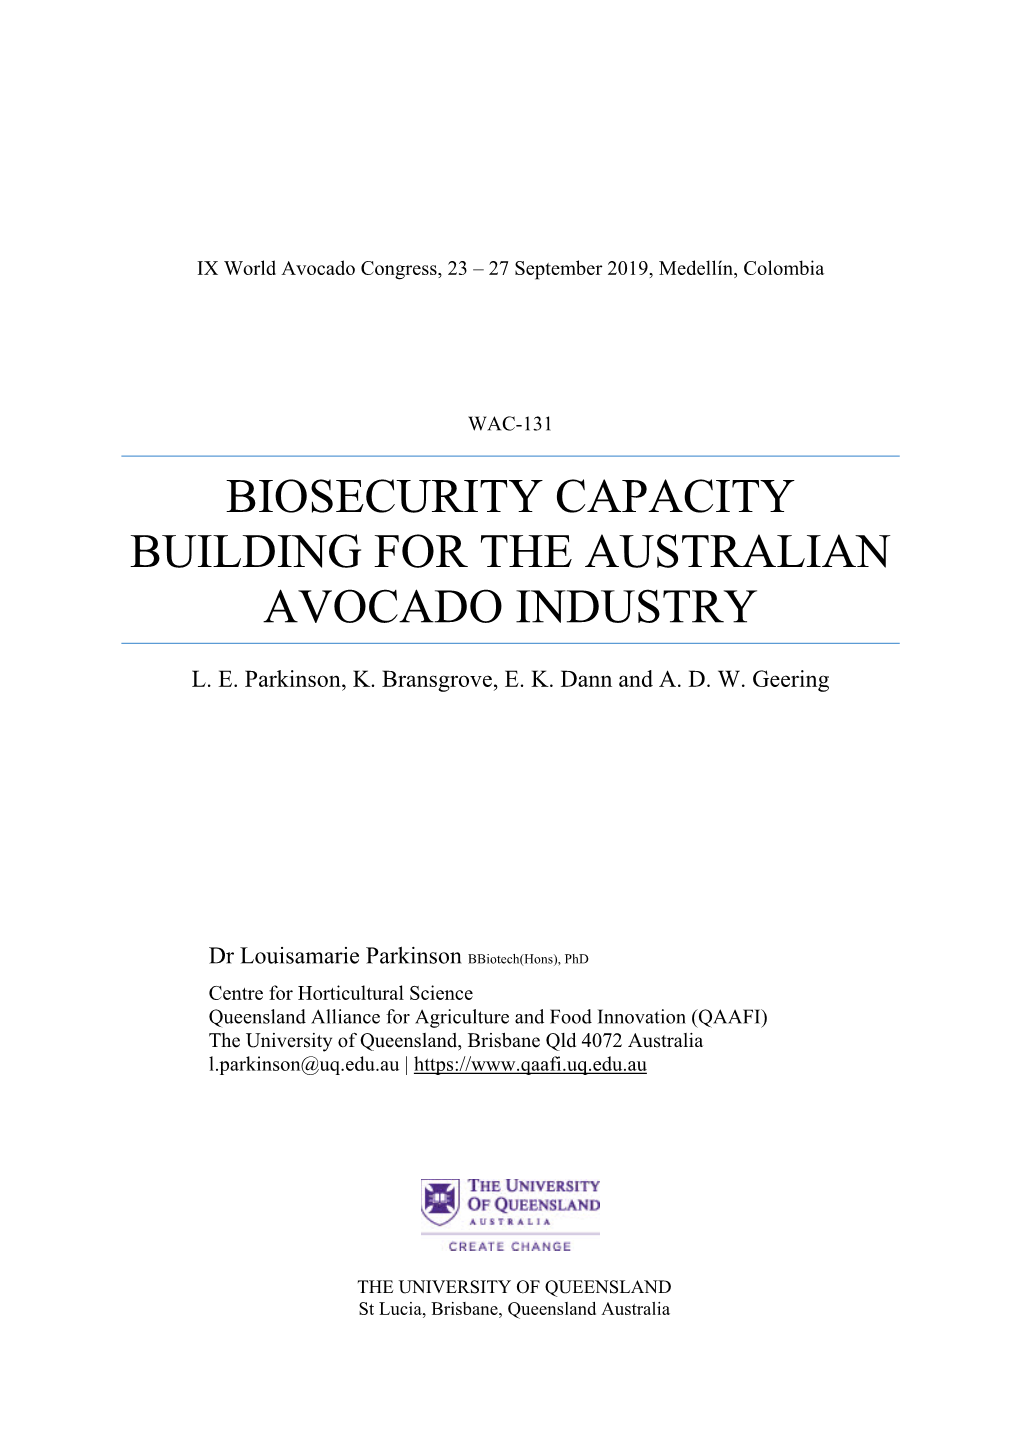 Biosecurity Capacity Building for the Australian Avocado Industry